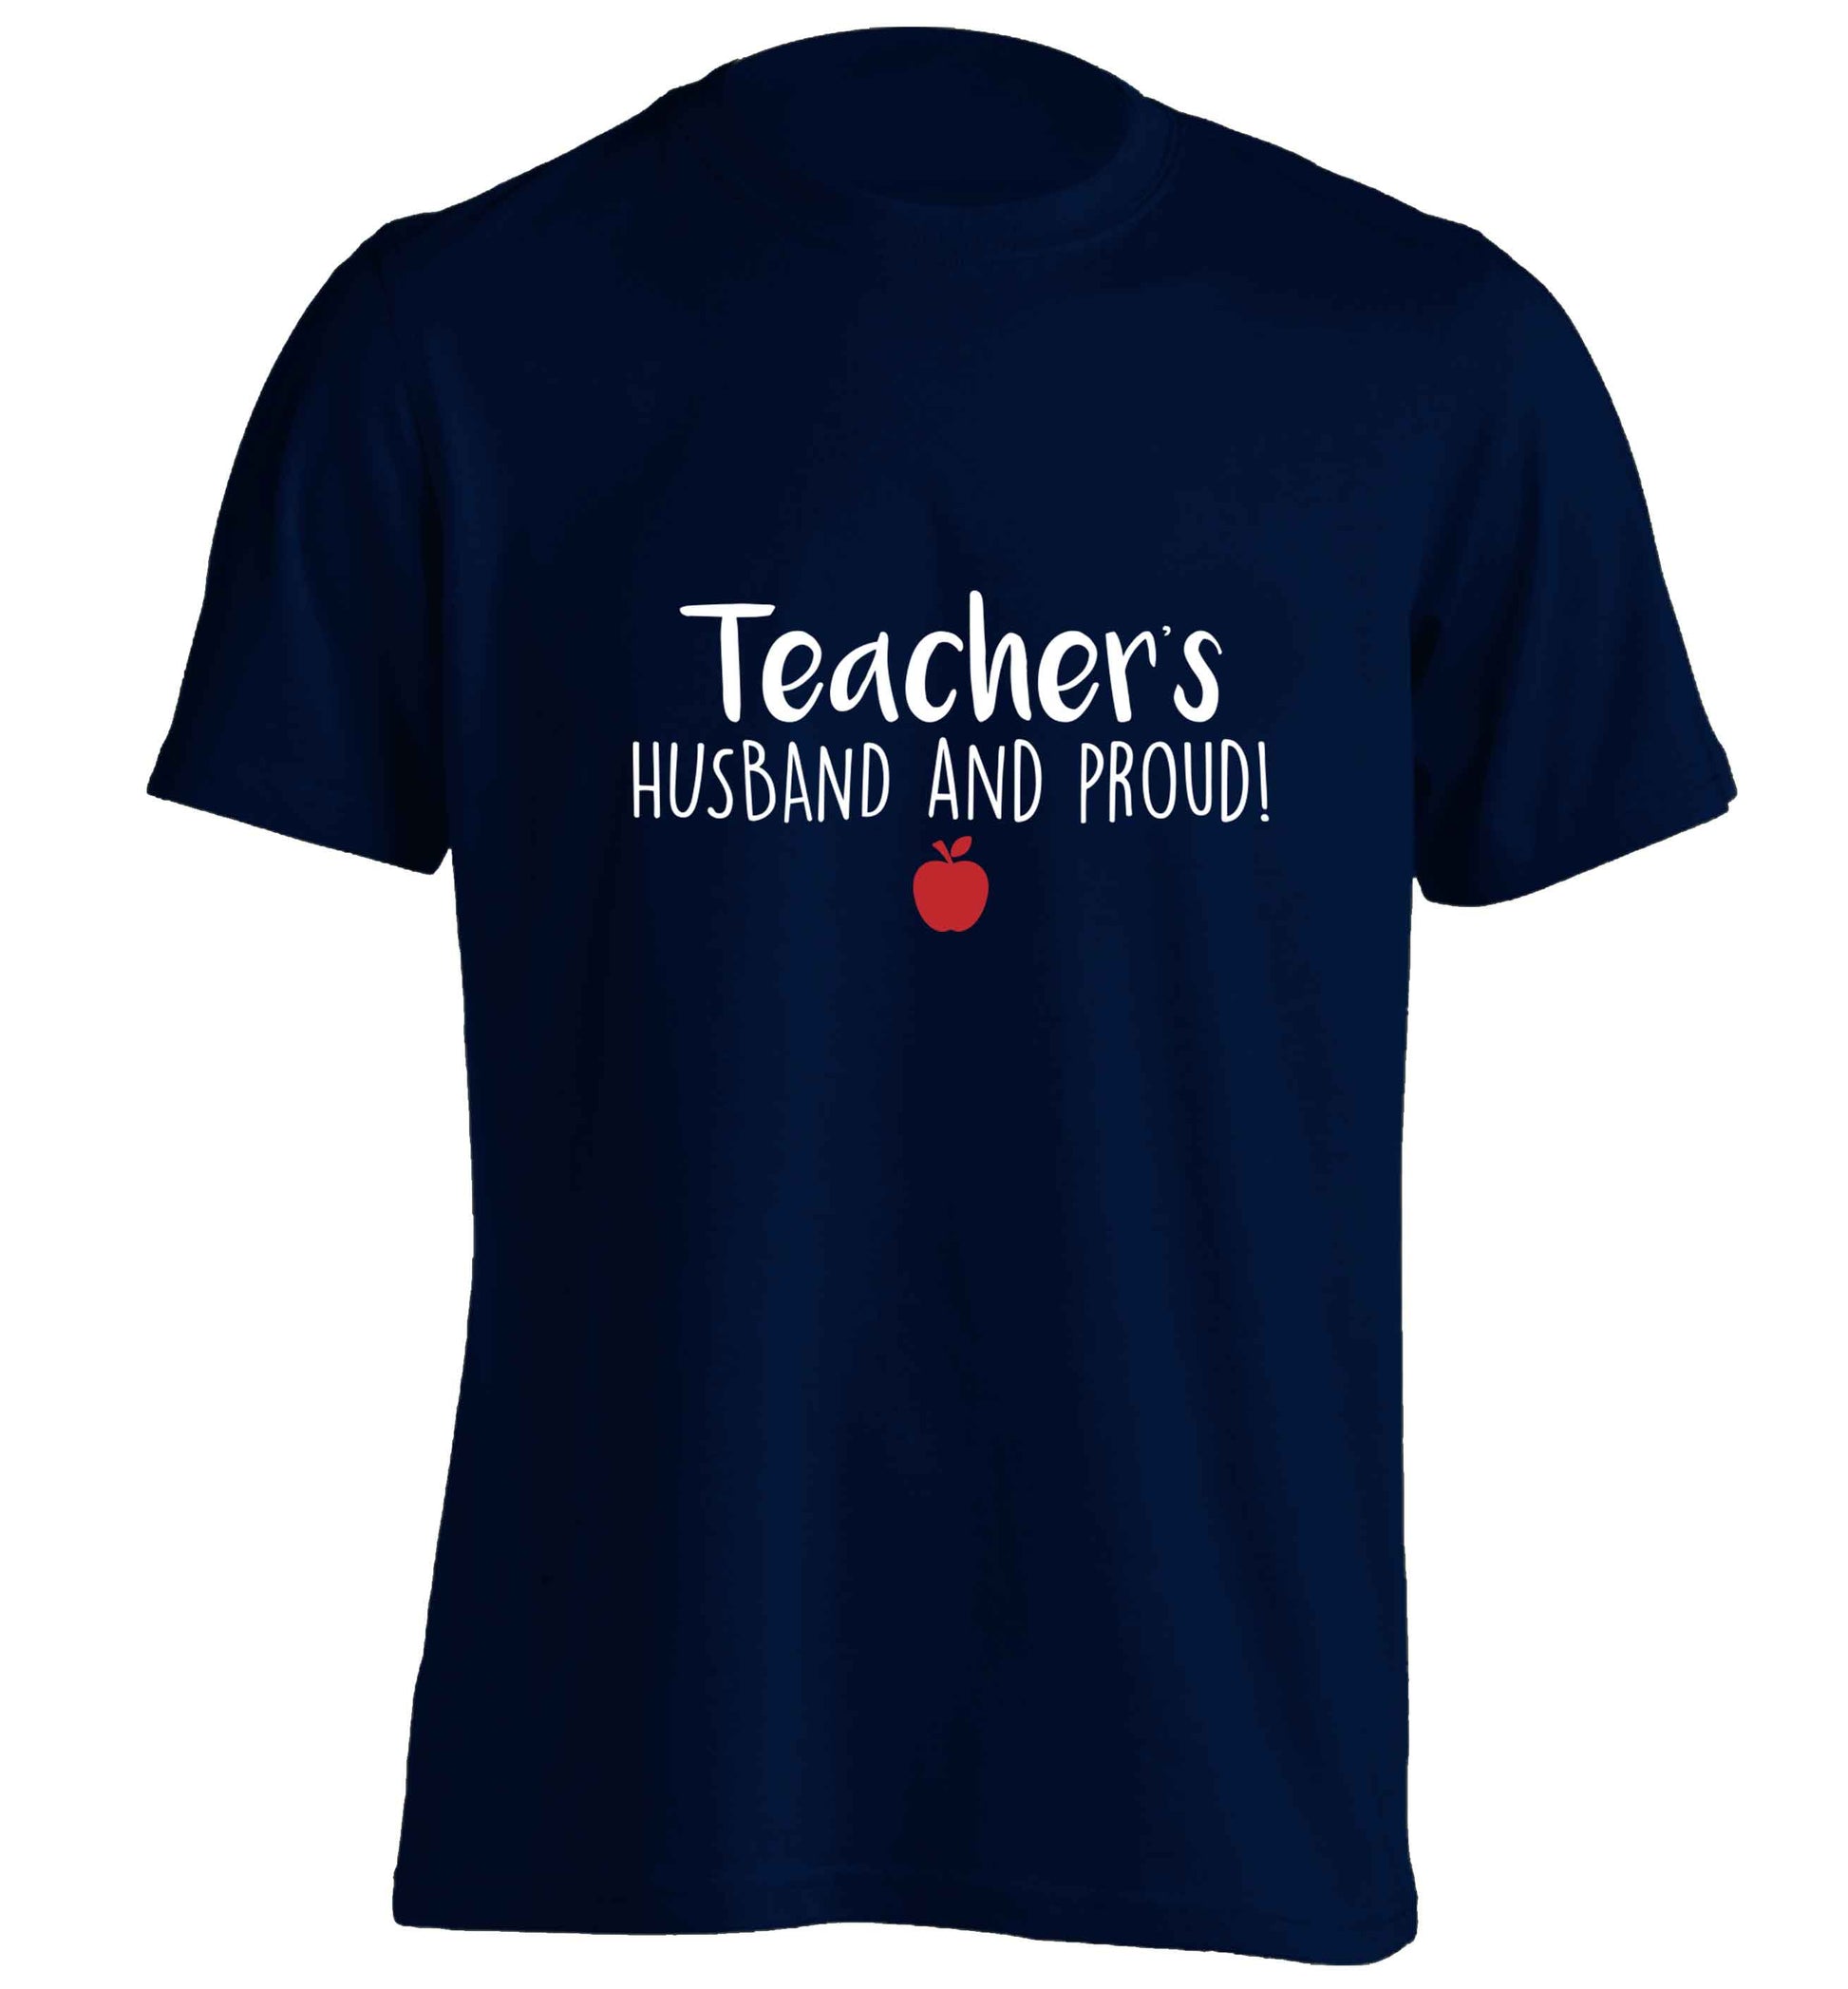 Teachers husband and proud adults unisex navy Tshirt 2XL